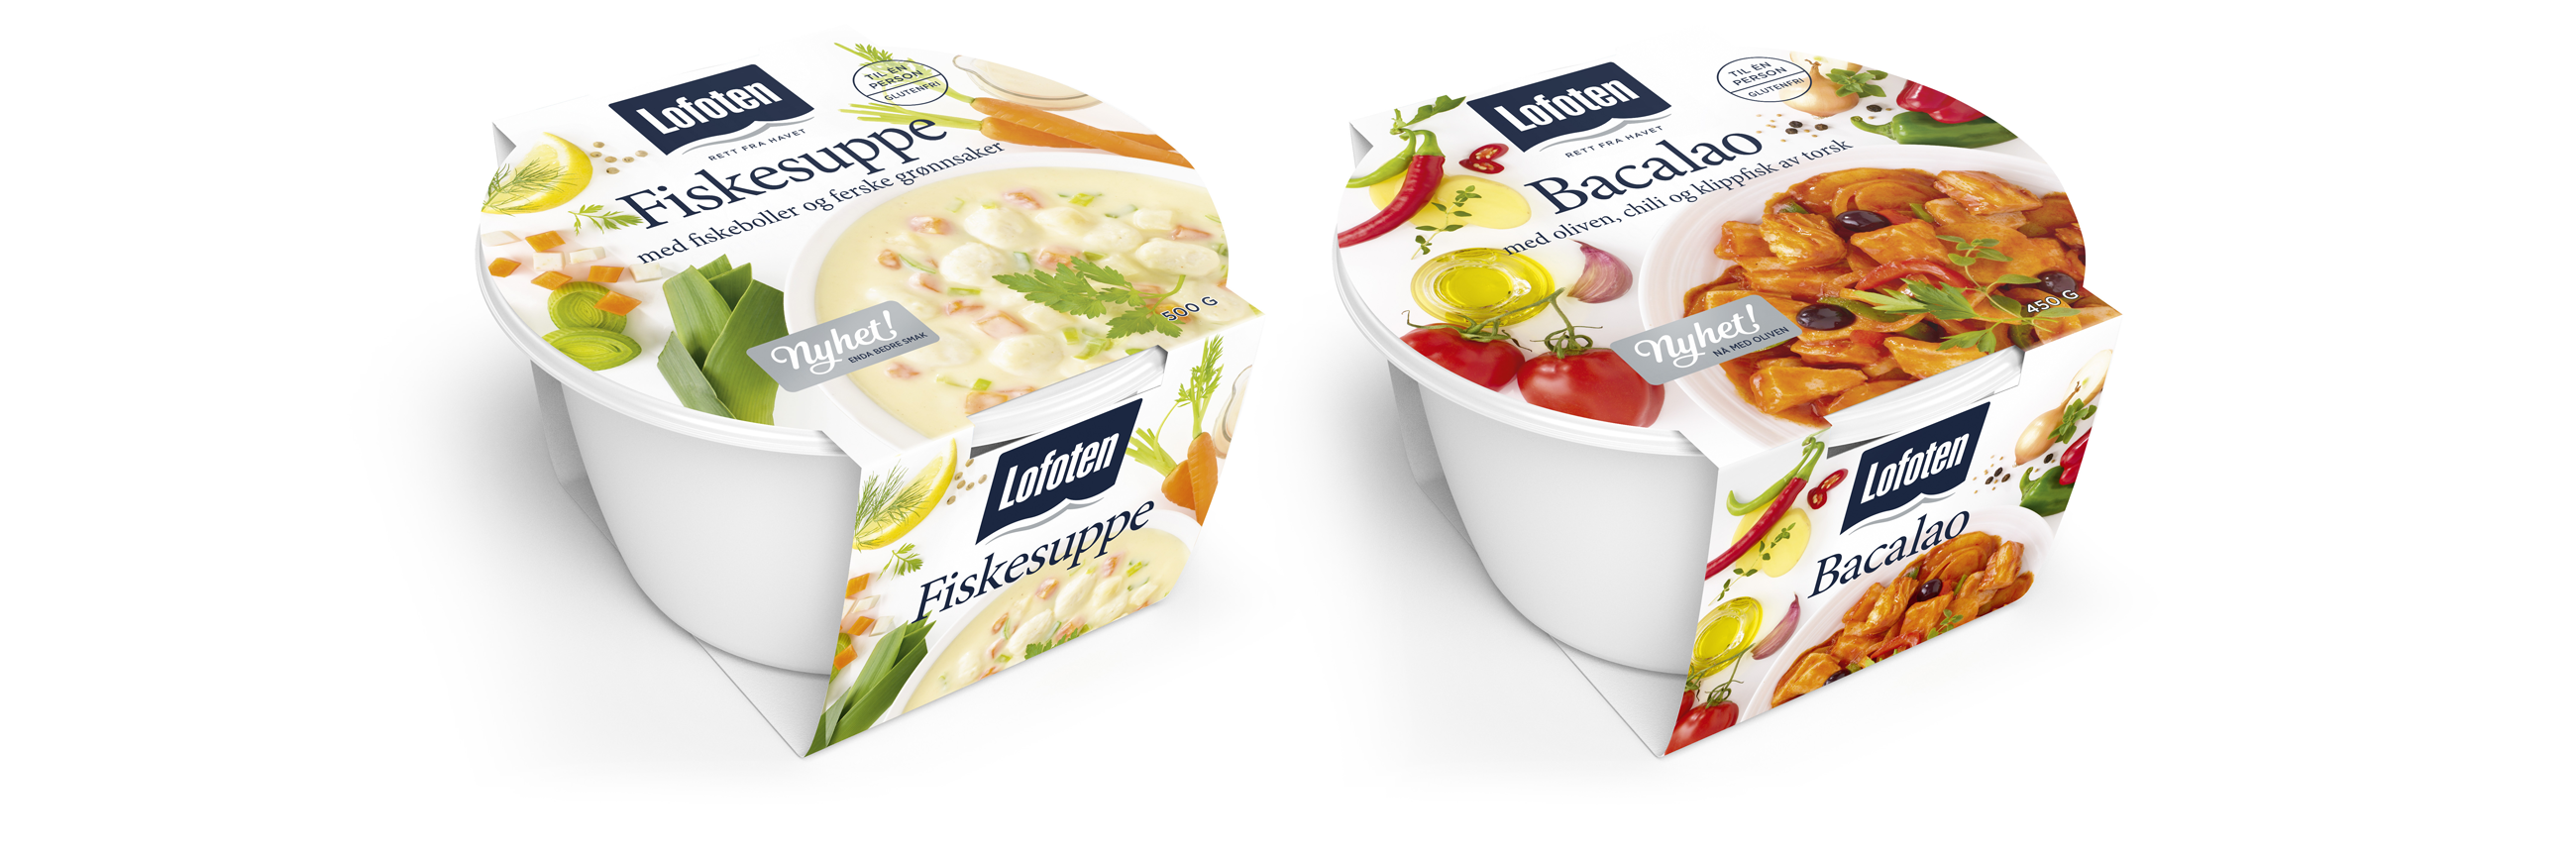 Lofoten Fiskesuppe og Bacalao. Emballasje packaging design.